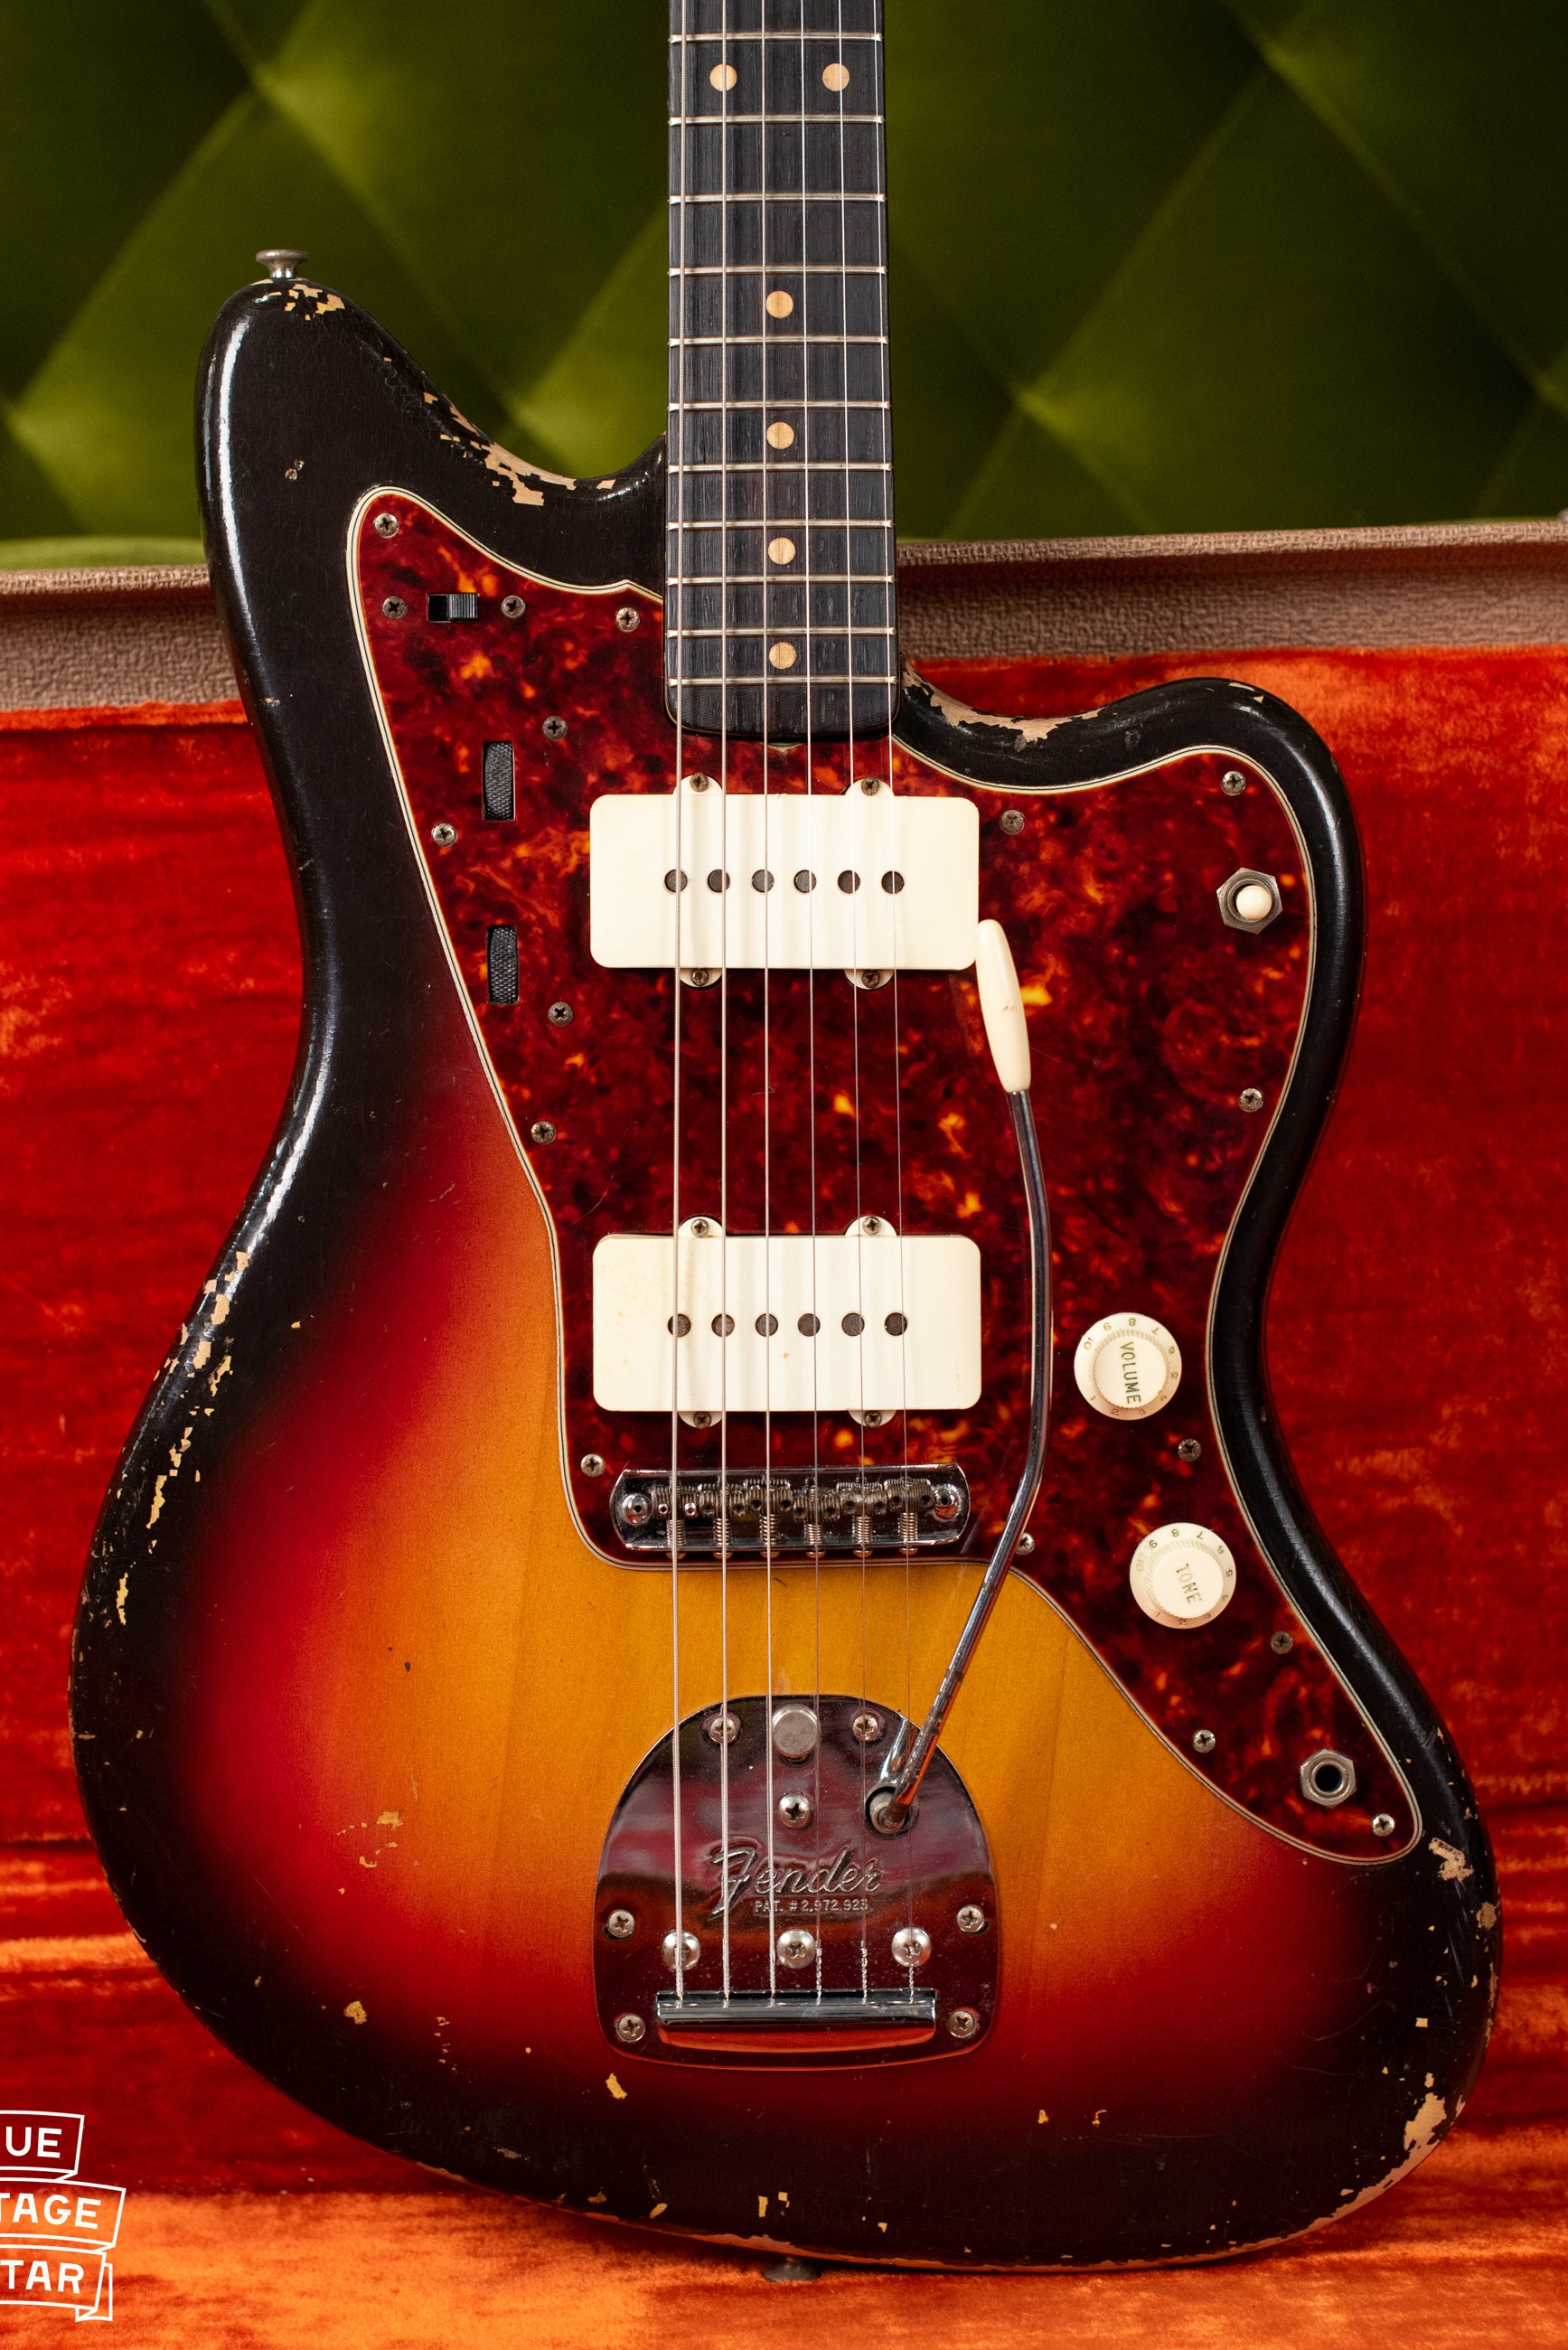 1962 Fender Jazzmaster electric guitar